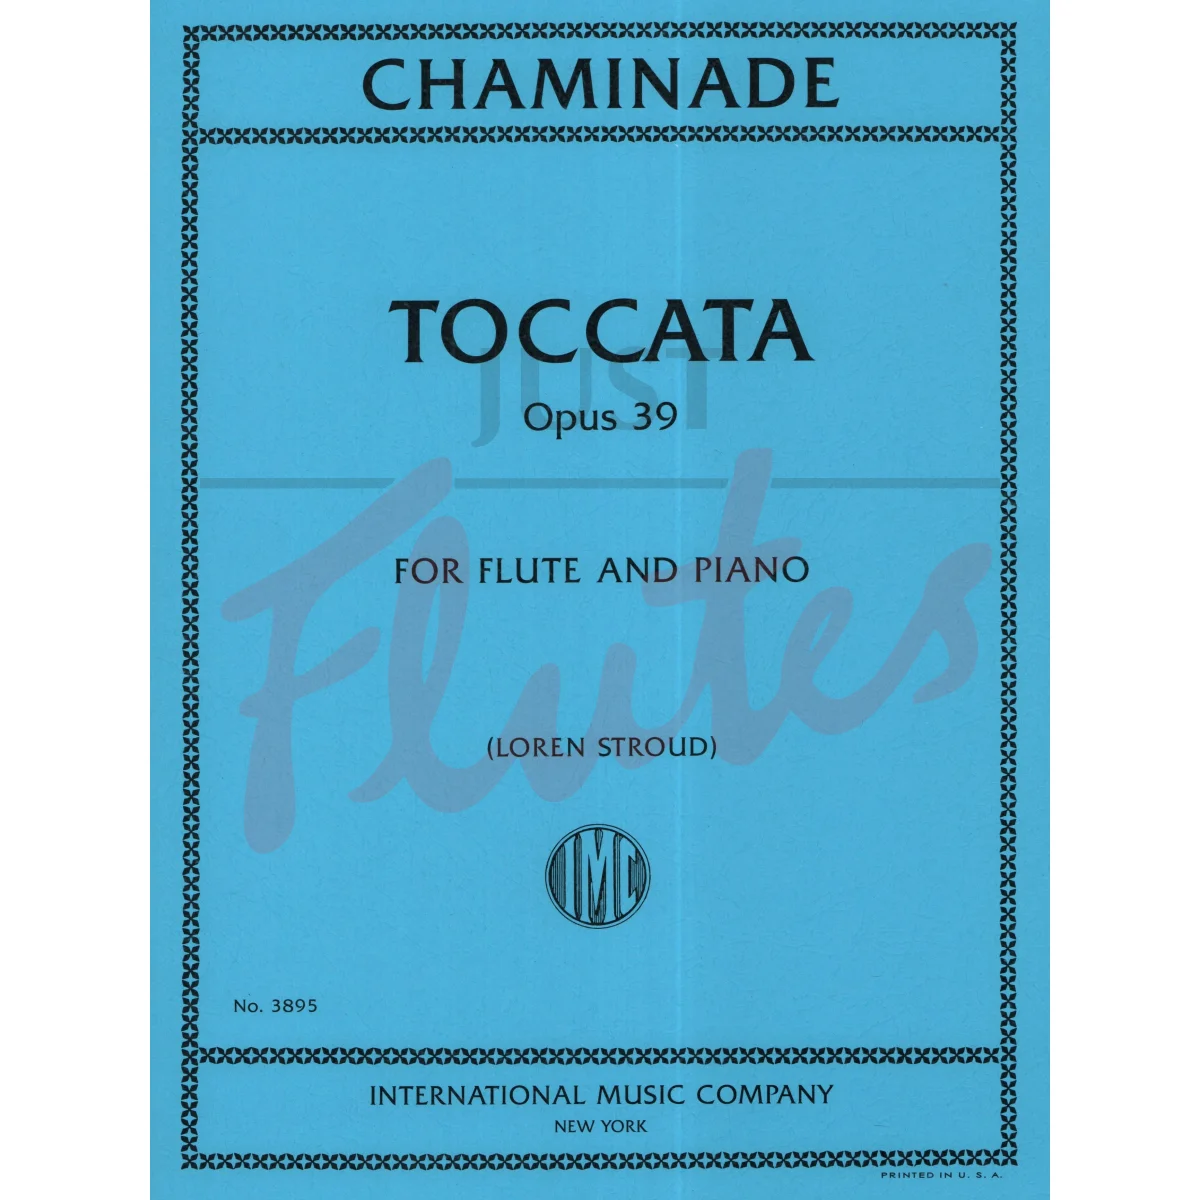 Toccata for Flute and Piano